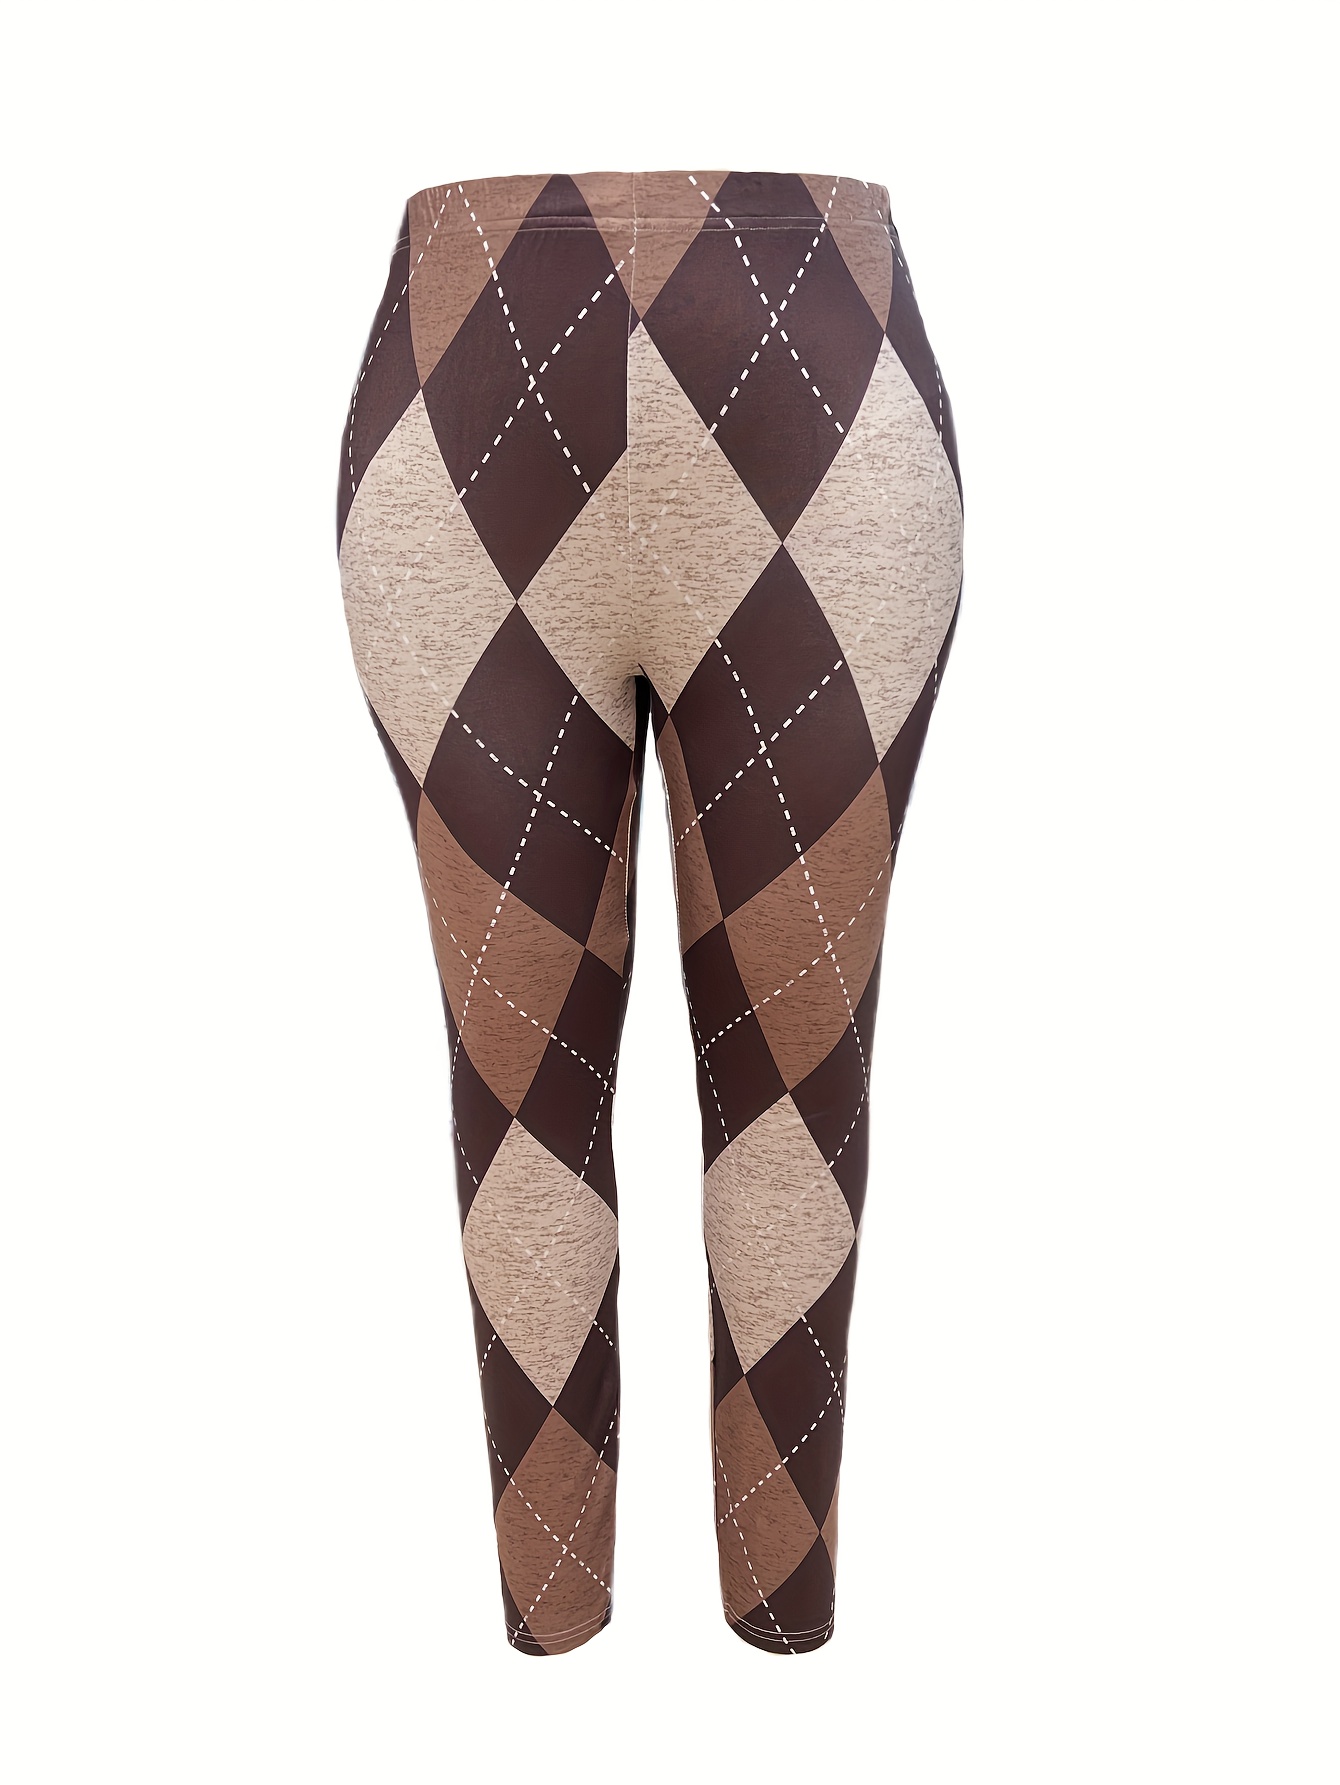 Argyle Leggings for Women Beige Brown Diamond Plaid Pattern Mid Rise Waist  Pants